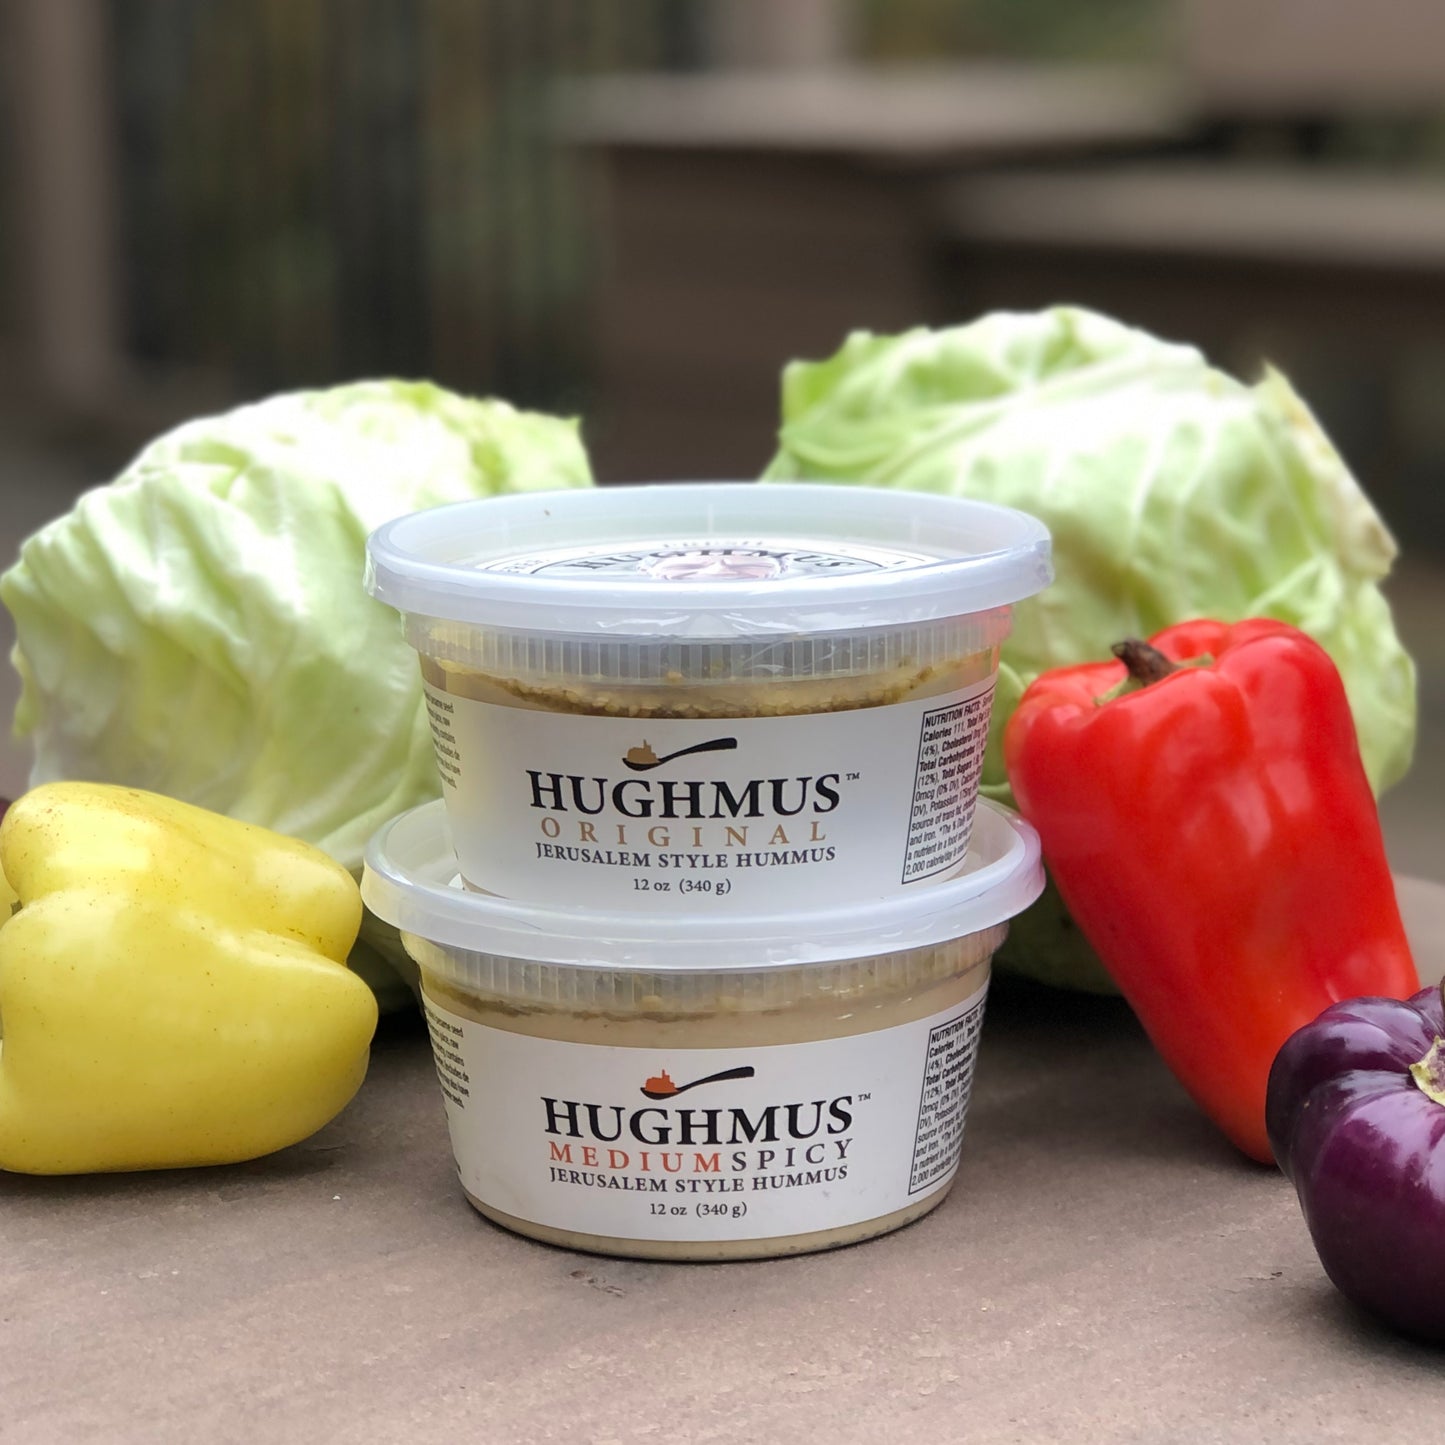 "Hughmus" Jerusalem Style Hummus